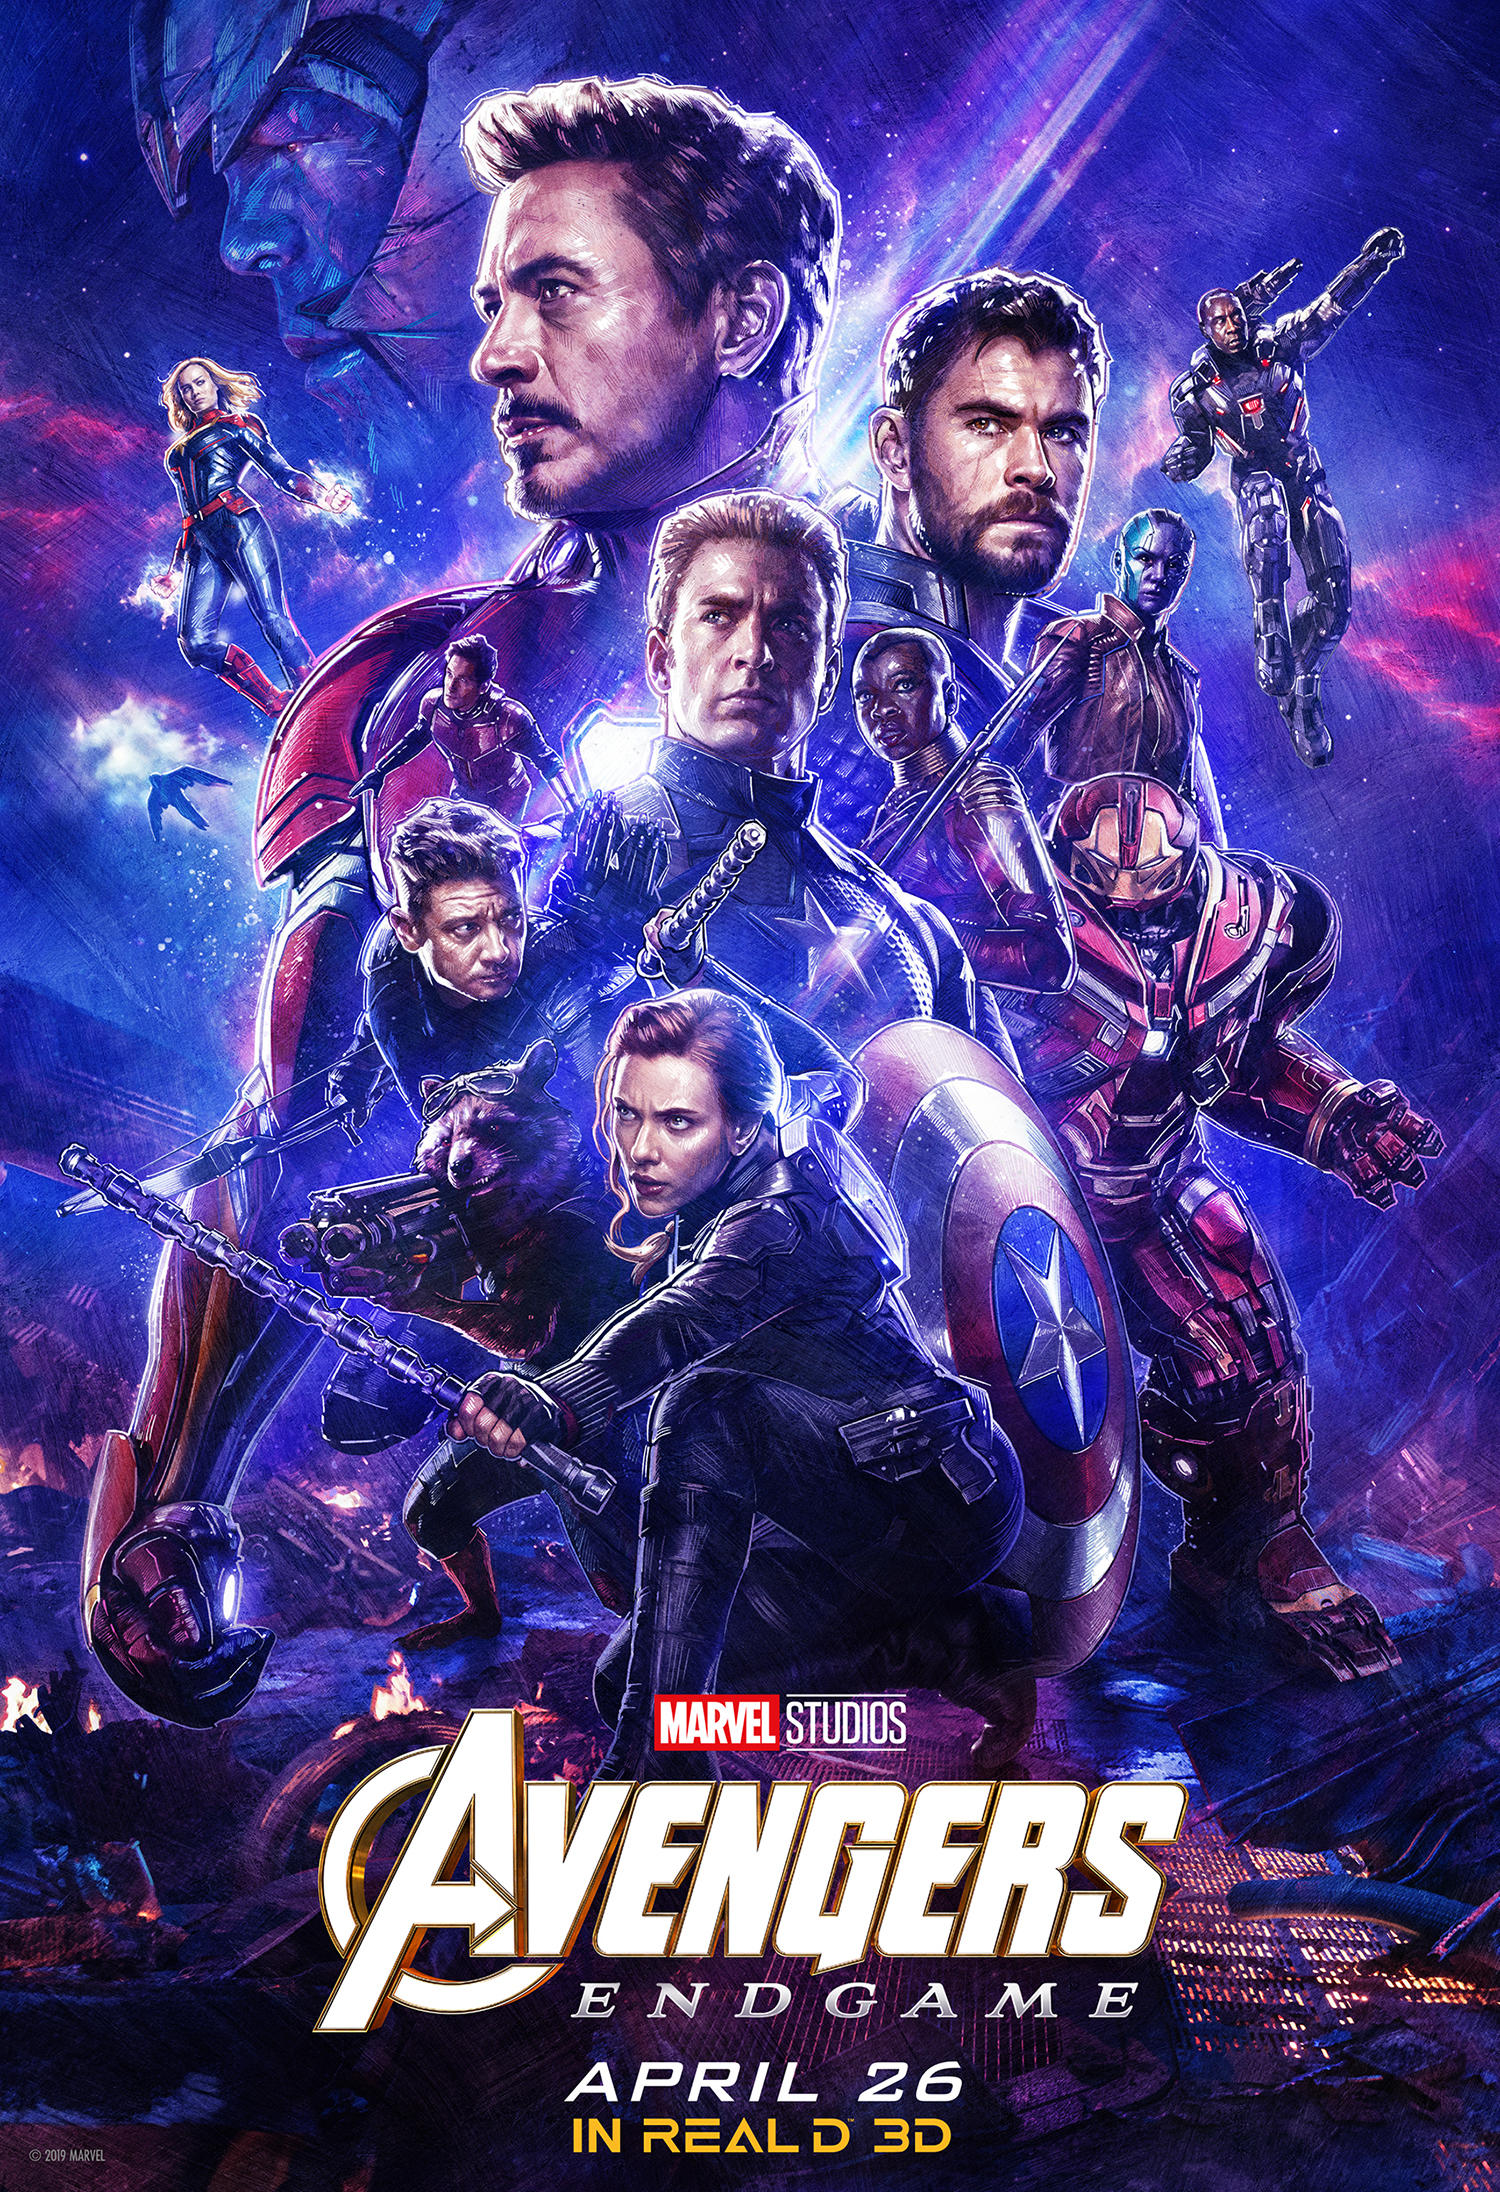 Image shows poster of Avengers Endgame